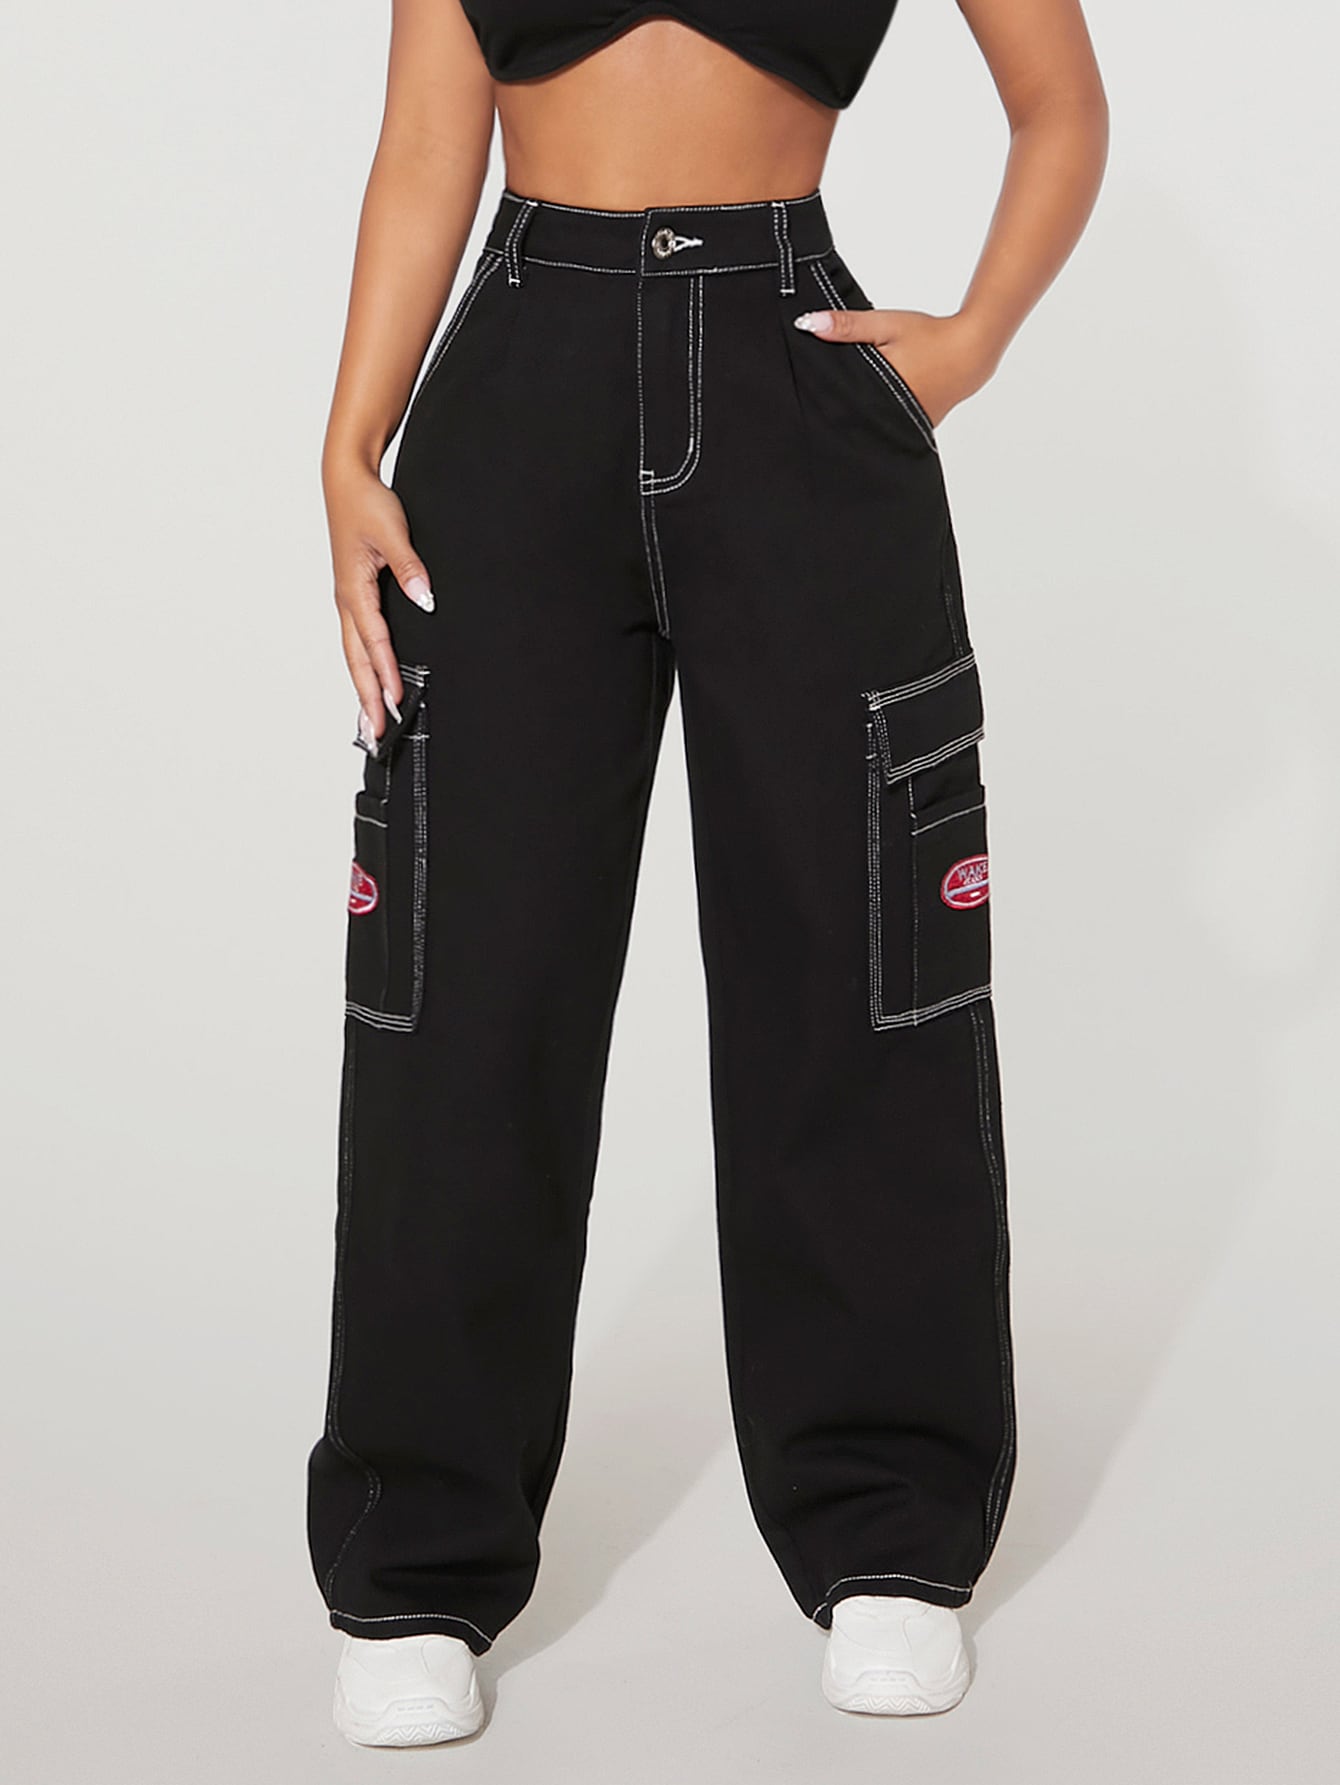  Jeans para mujer - Jeans cargo con bolsillo lateral con solapa  (color : blanco, talla: XS) : Ropa, Zapatos y Joyería